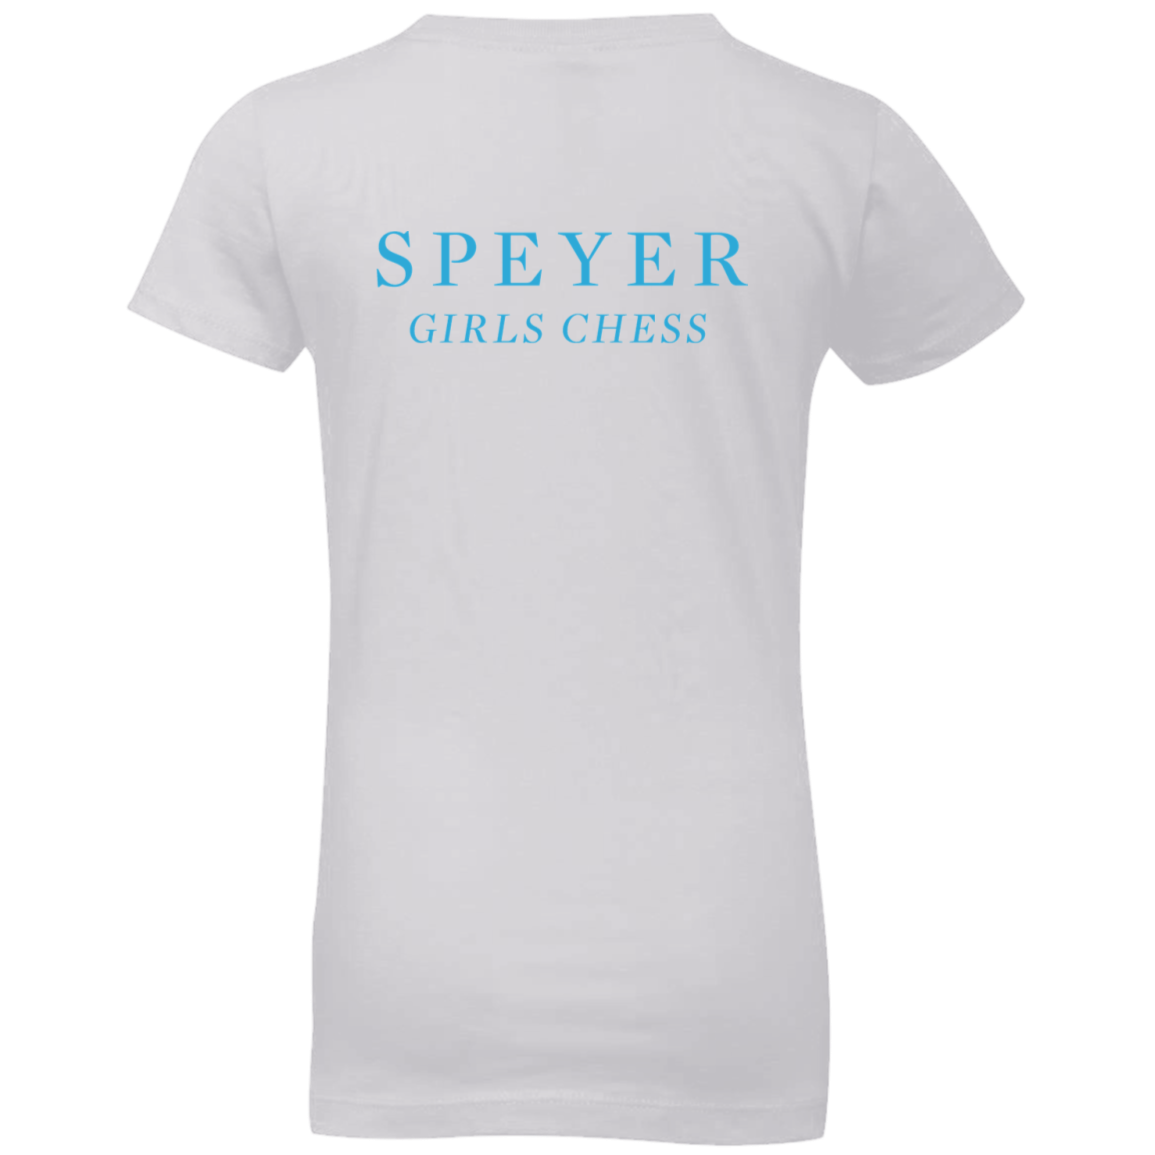 Speyer Chess Girls T-shirt, Youth Sizes